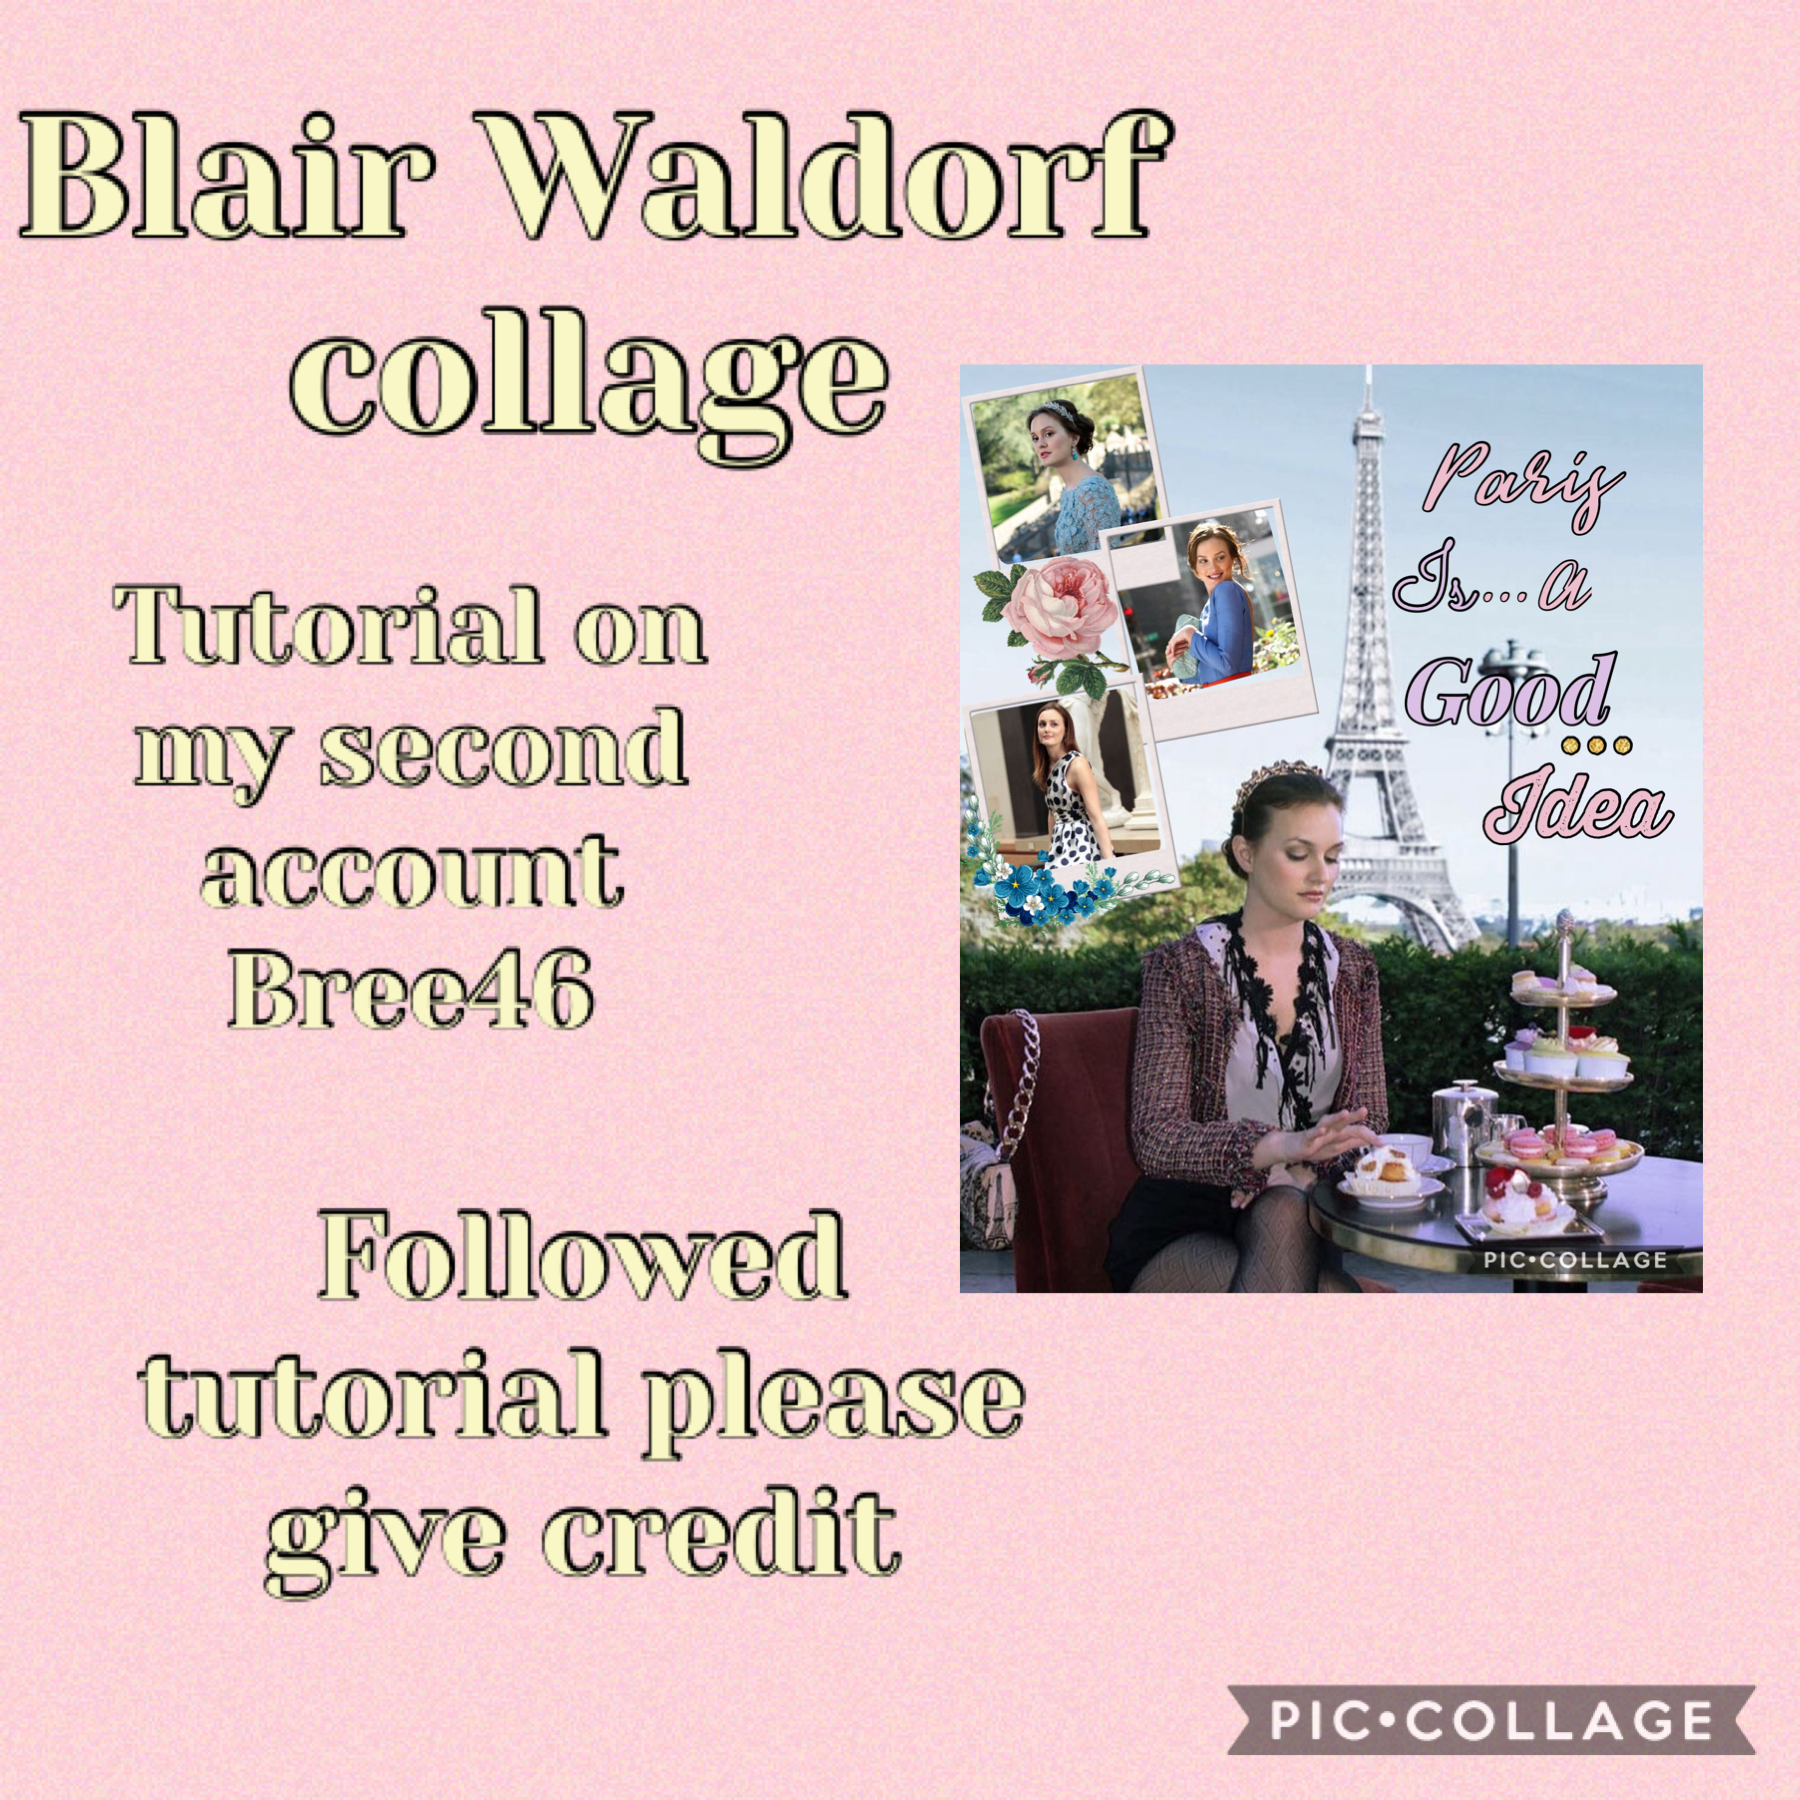 Blair Waldorf tutorial on my second account Bree46 